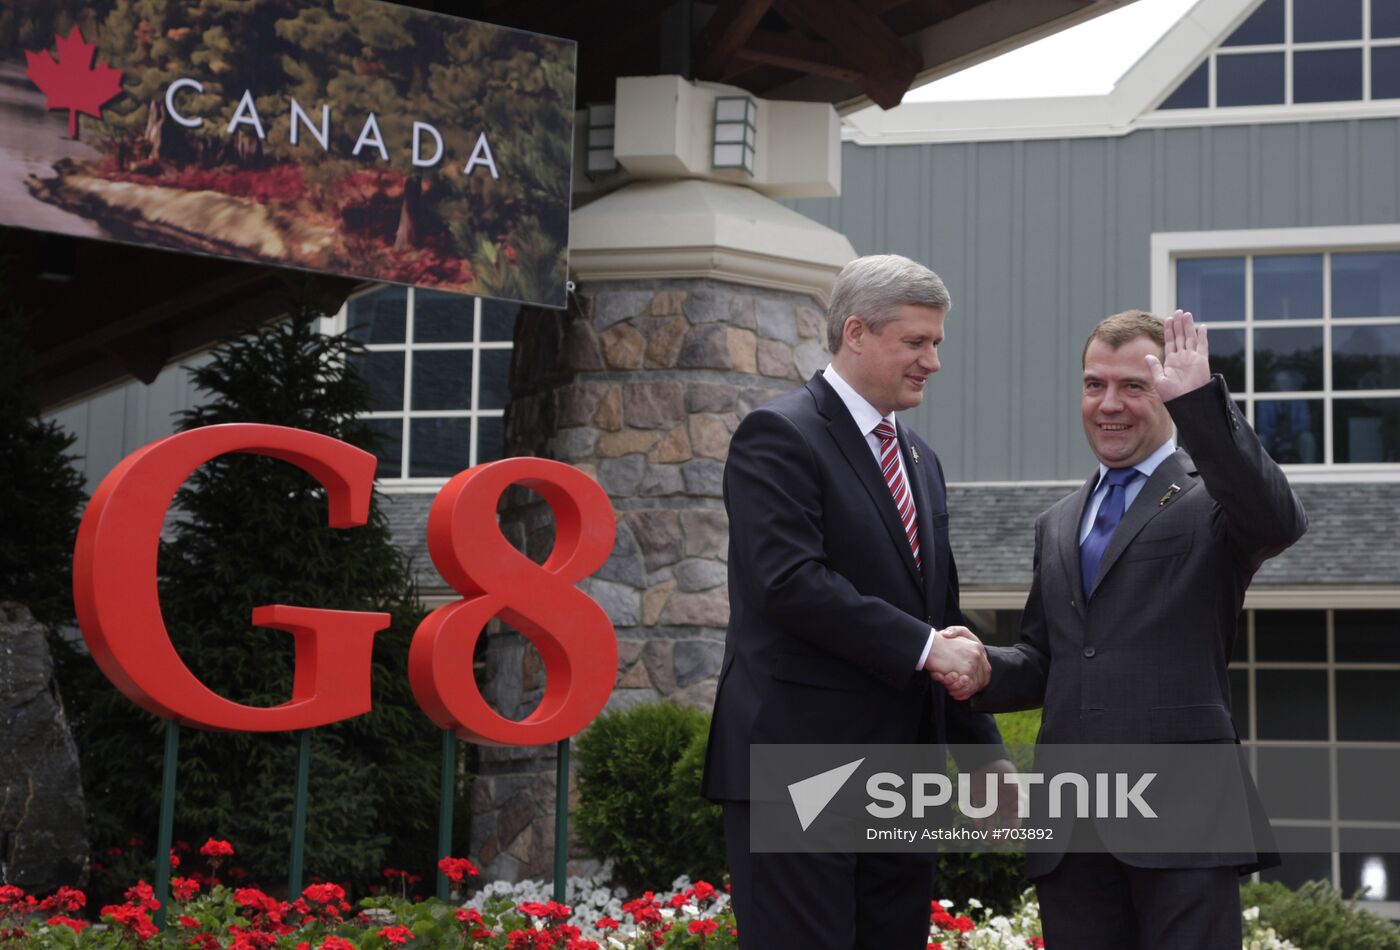 Dmitry Medvedev attends G8 summit, Canada